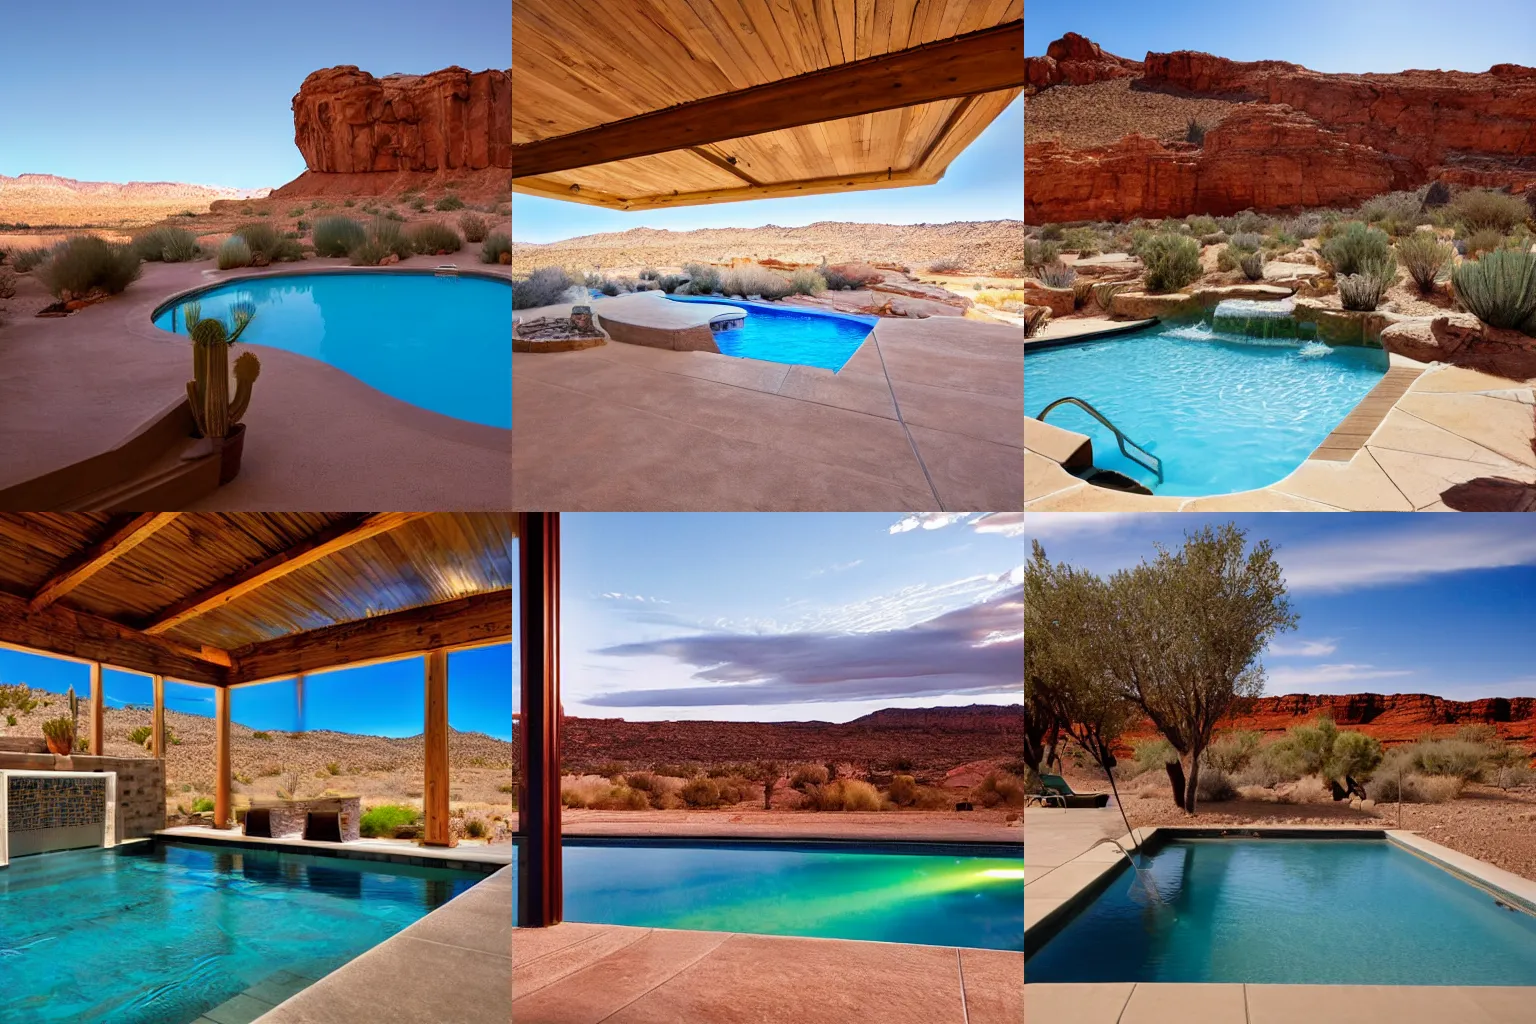 Prompt: Utah desert landscape pool room, photo